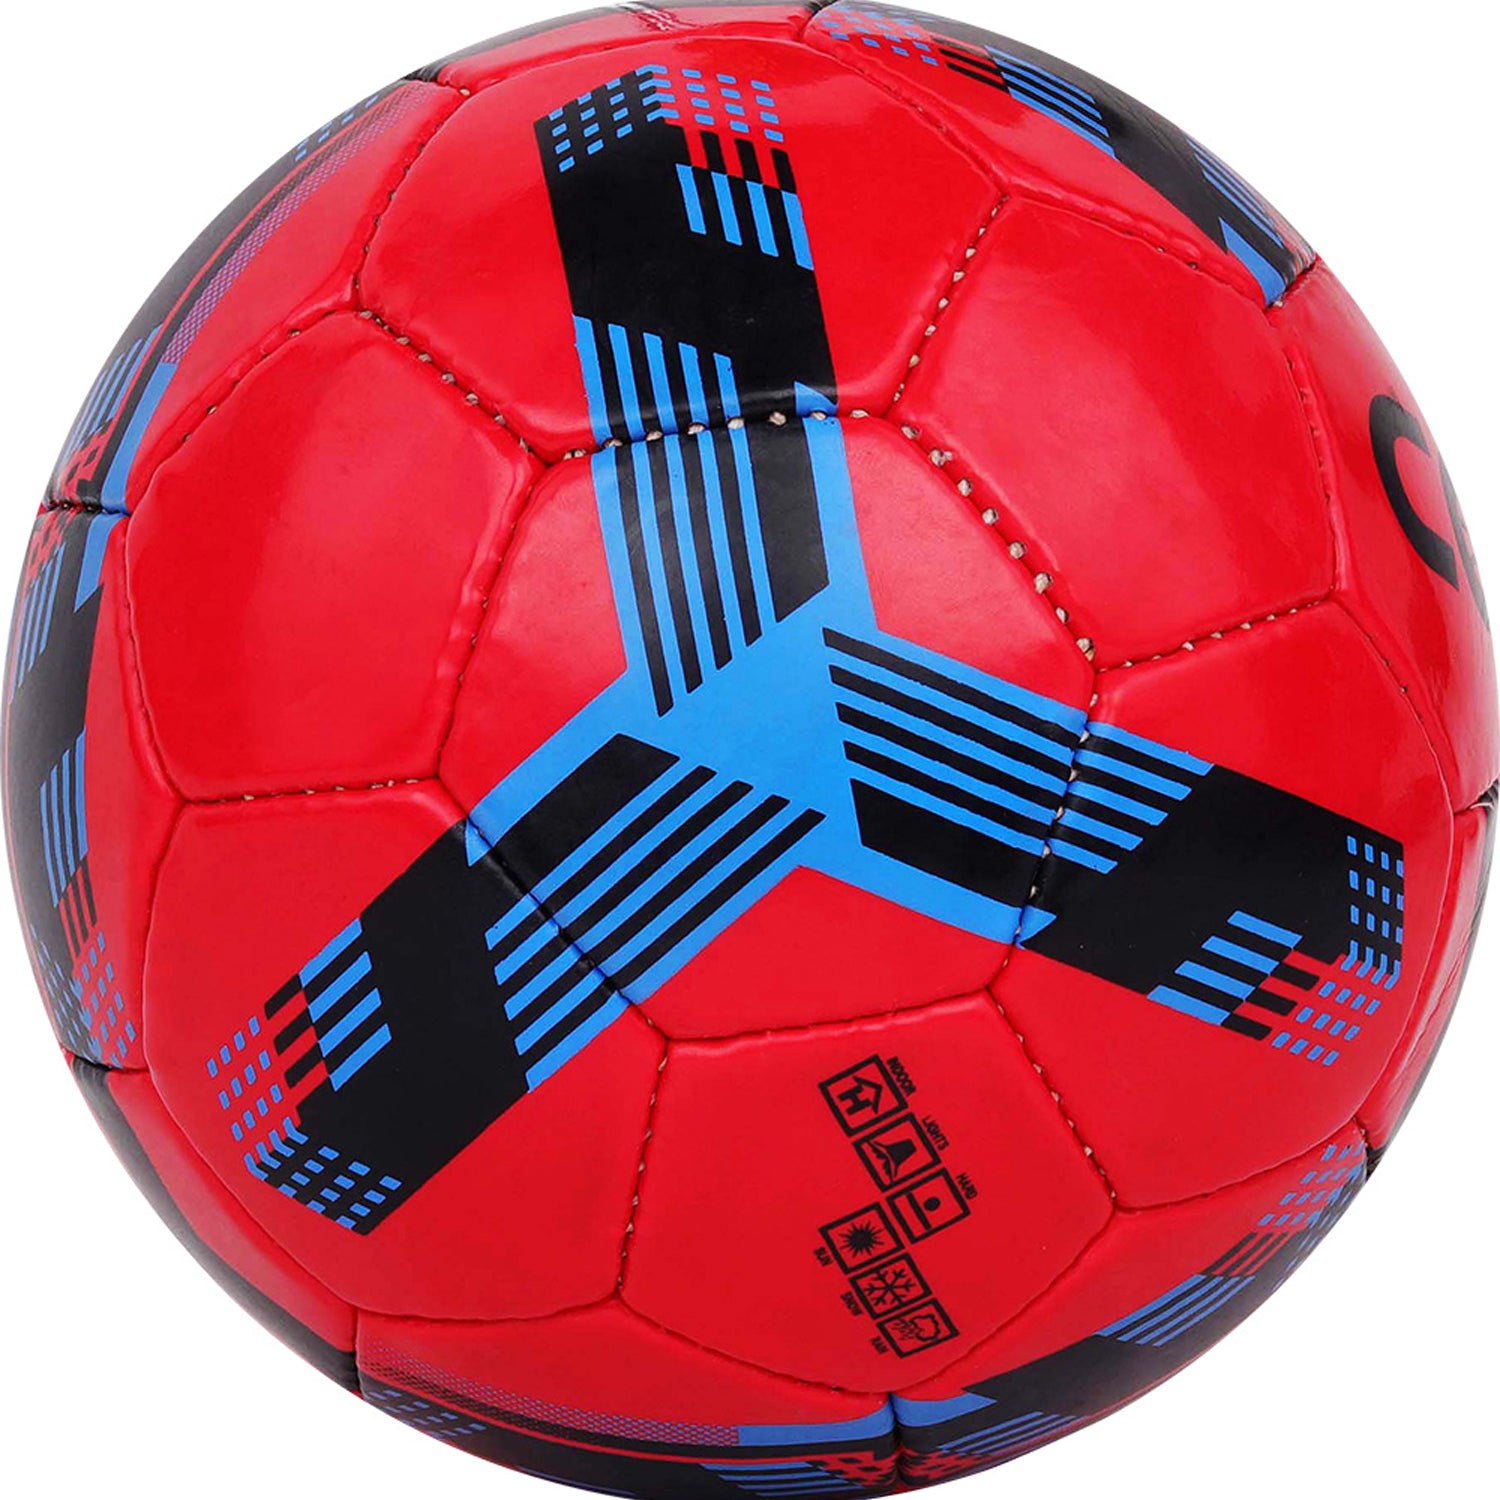 Cosco Belgium Football, Size 3 (Assorted Color) - Best Price online Prokicksports.com